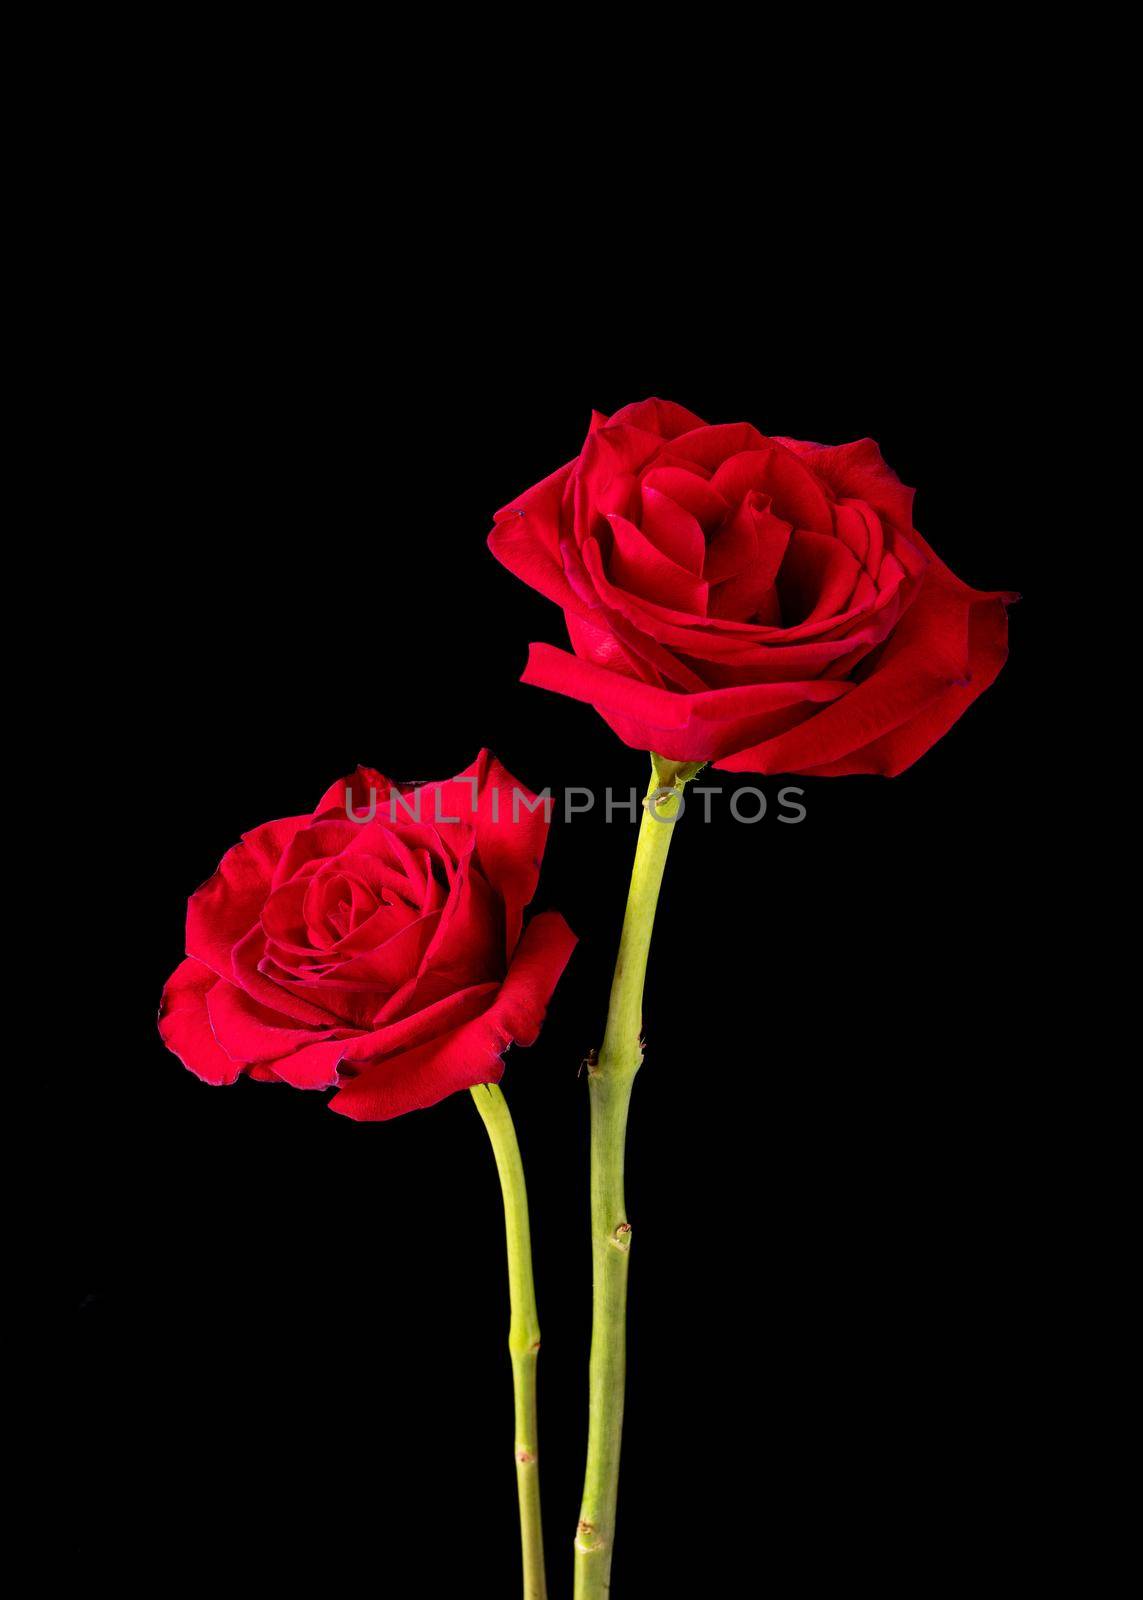 Pair of American Beauty Roses on Black by CharlieFloyd